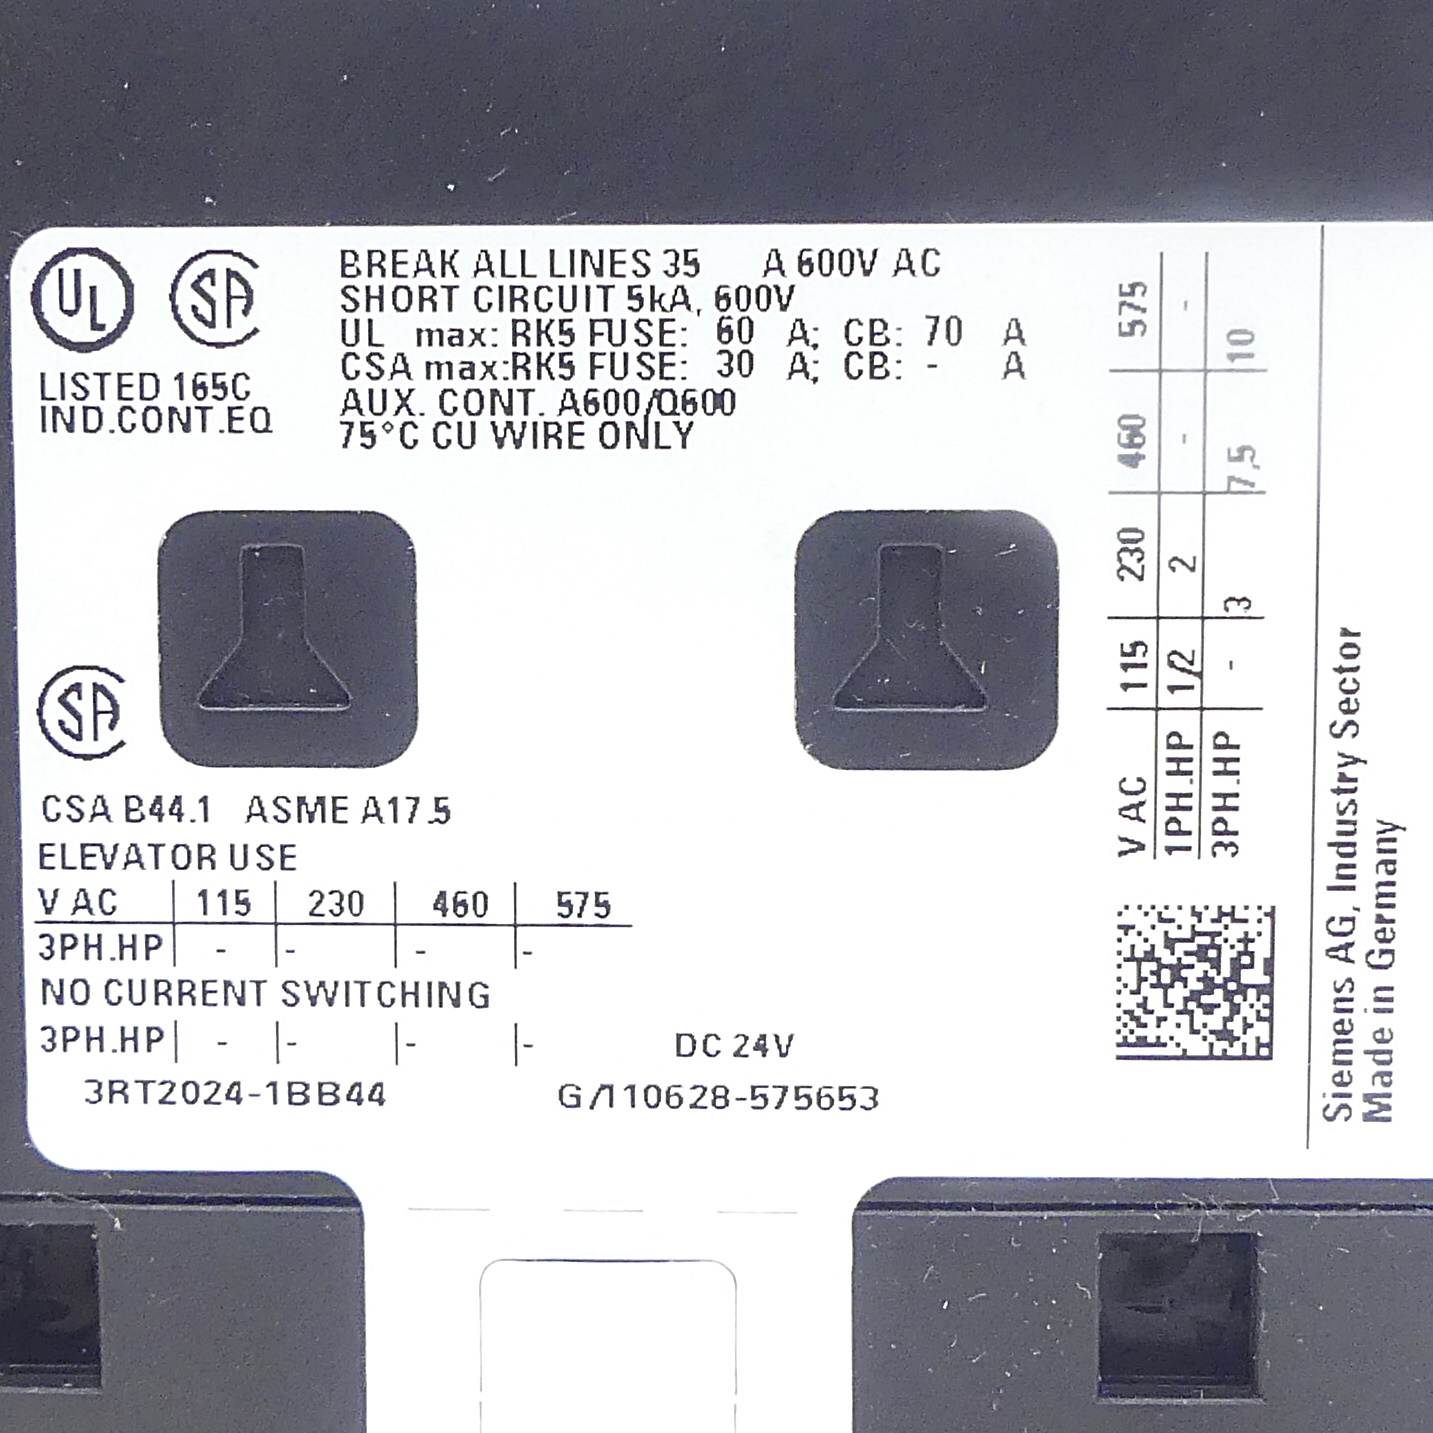 Power contactor 3RT2024-1BB44 